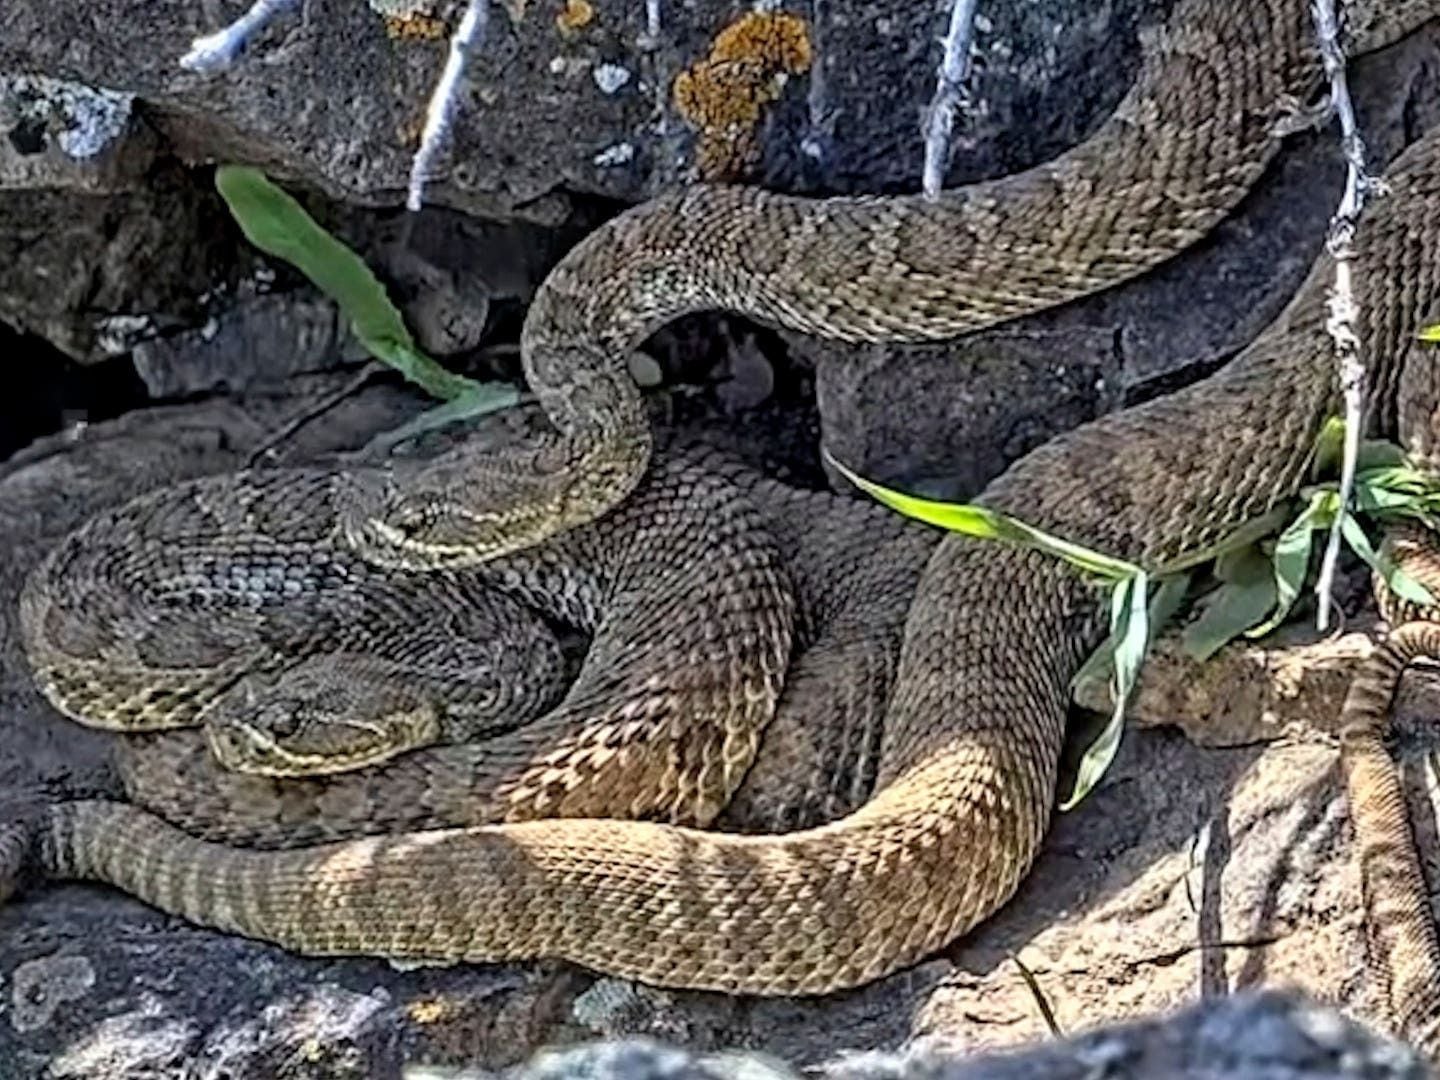 Webcam monitors hundreds of rattlesnakes at Colorado ‘mega den’